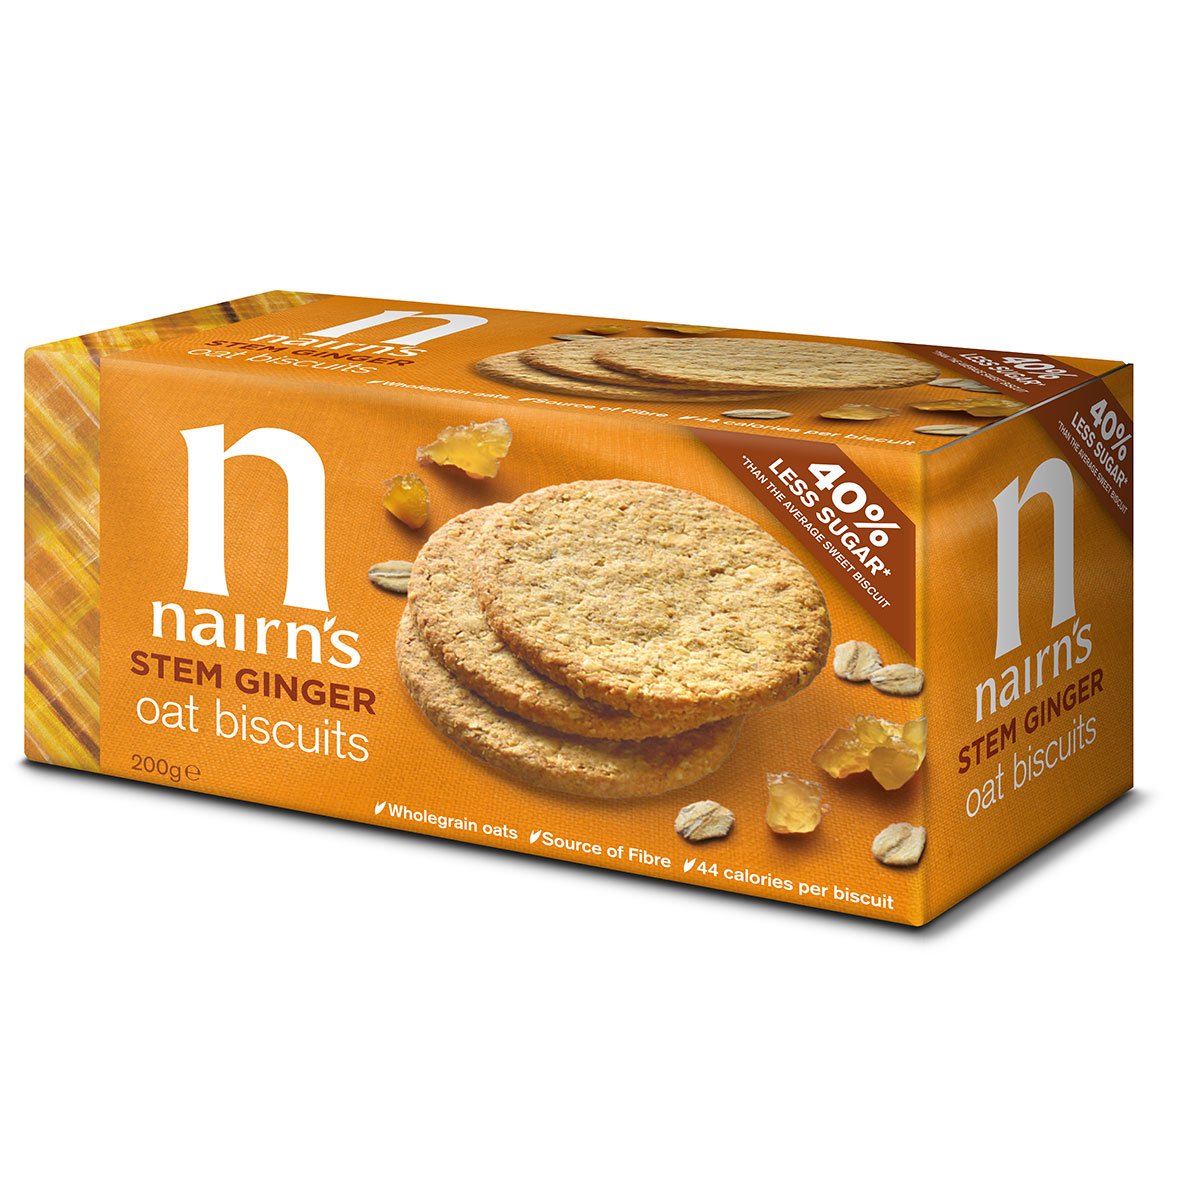 Nairns Stem Ginger Oat Biscuits 200g - Just Natural